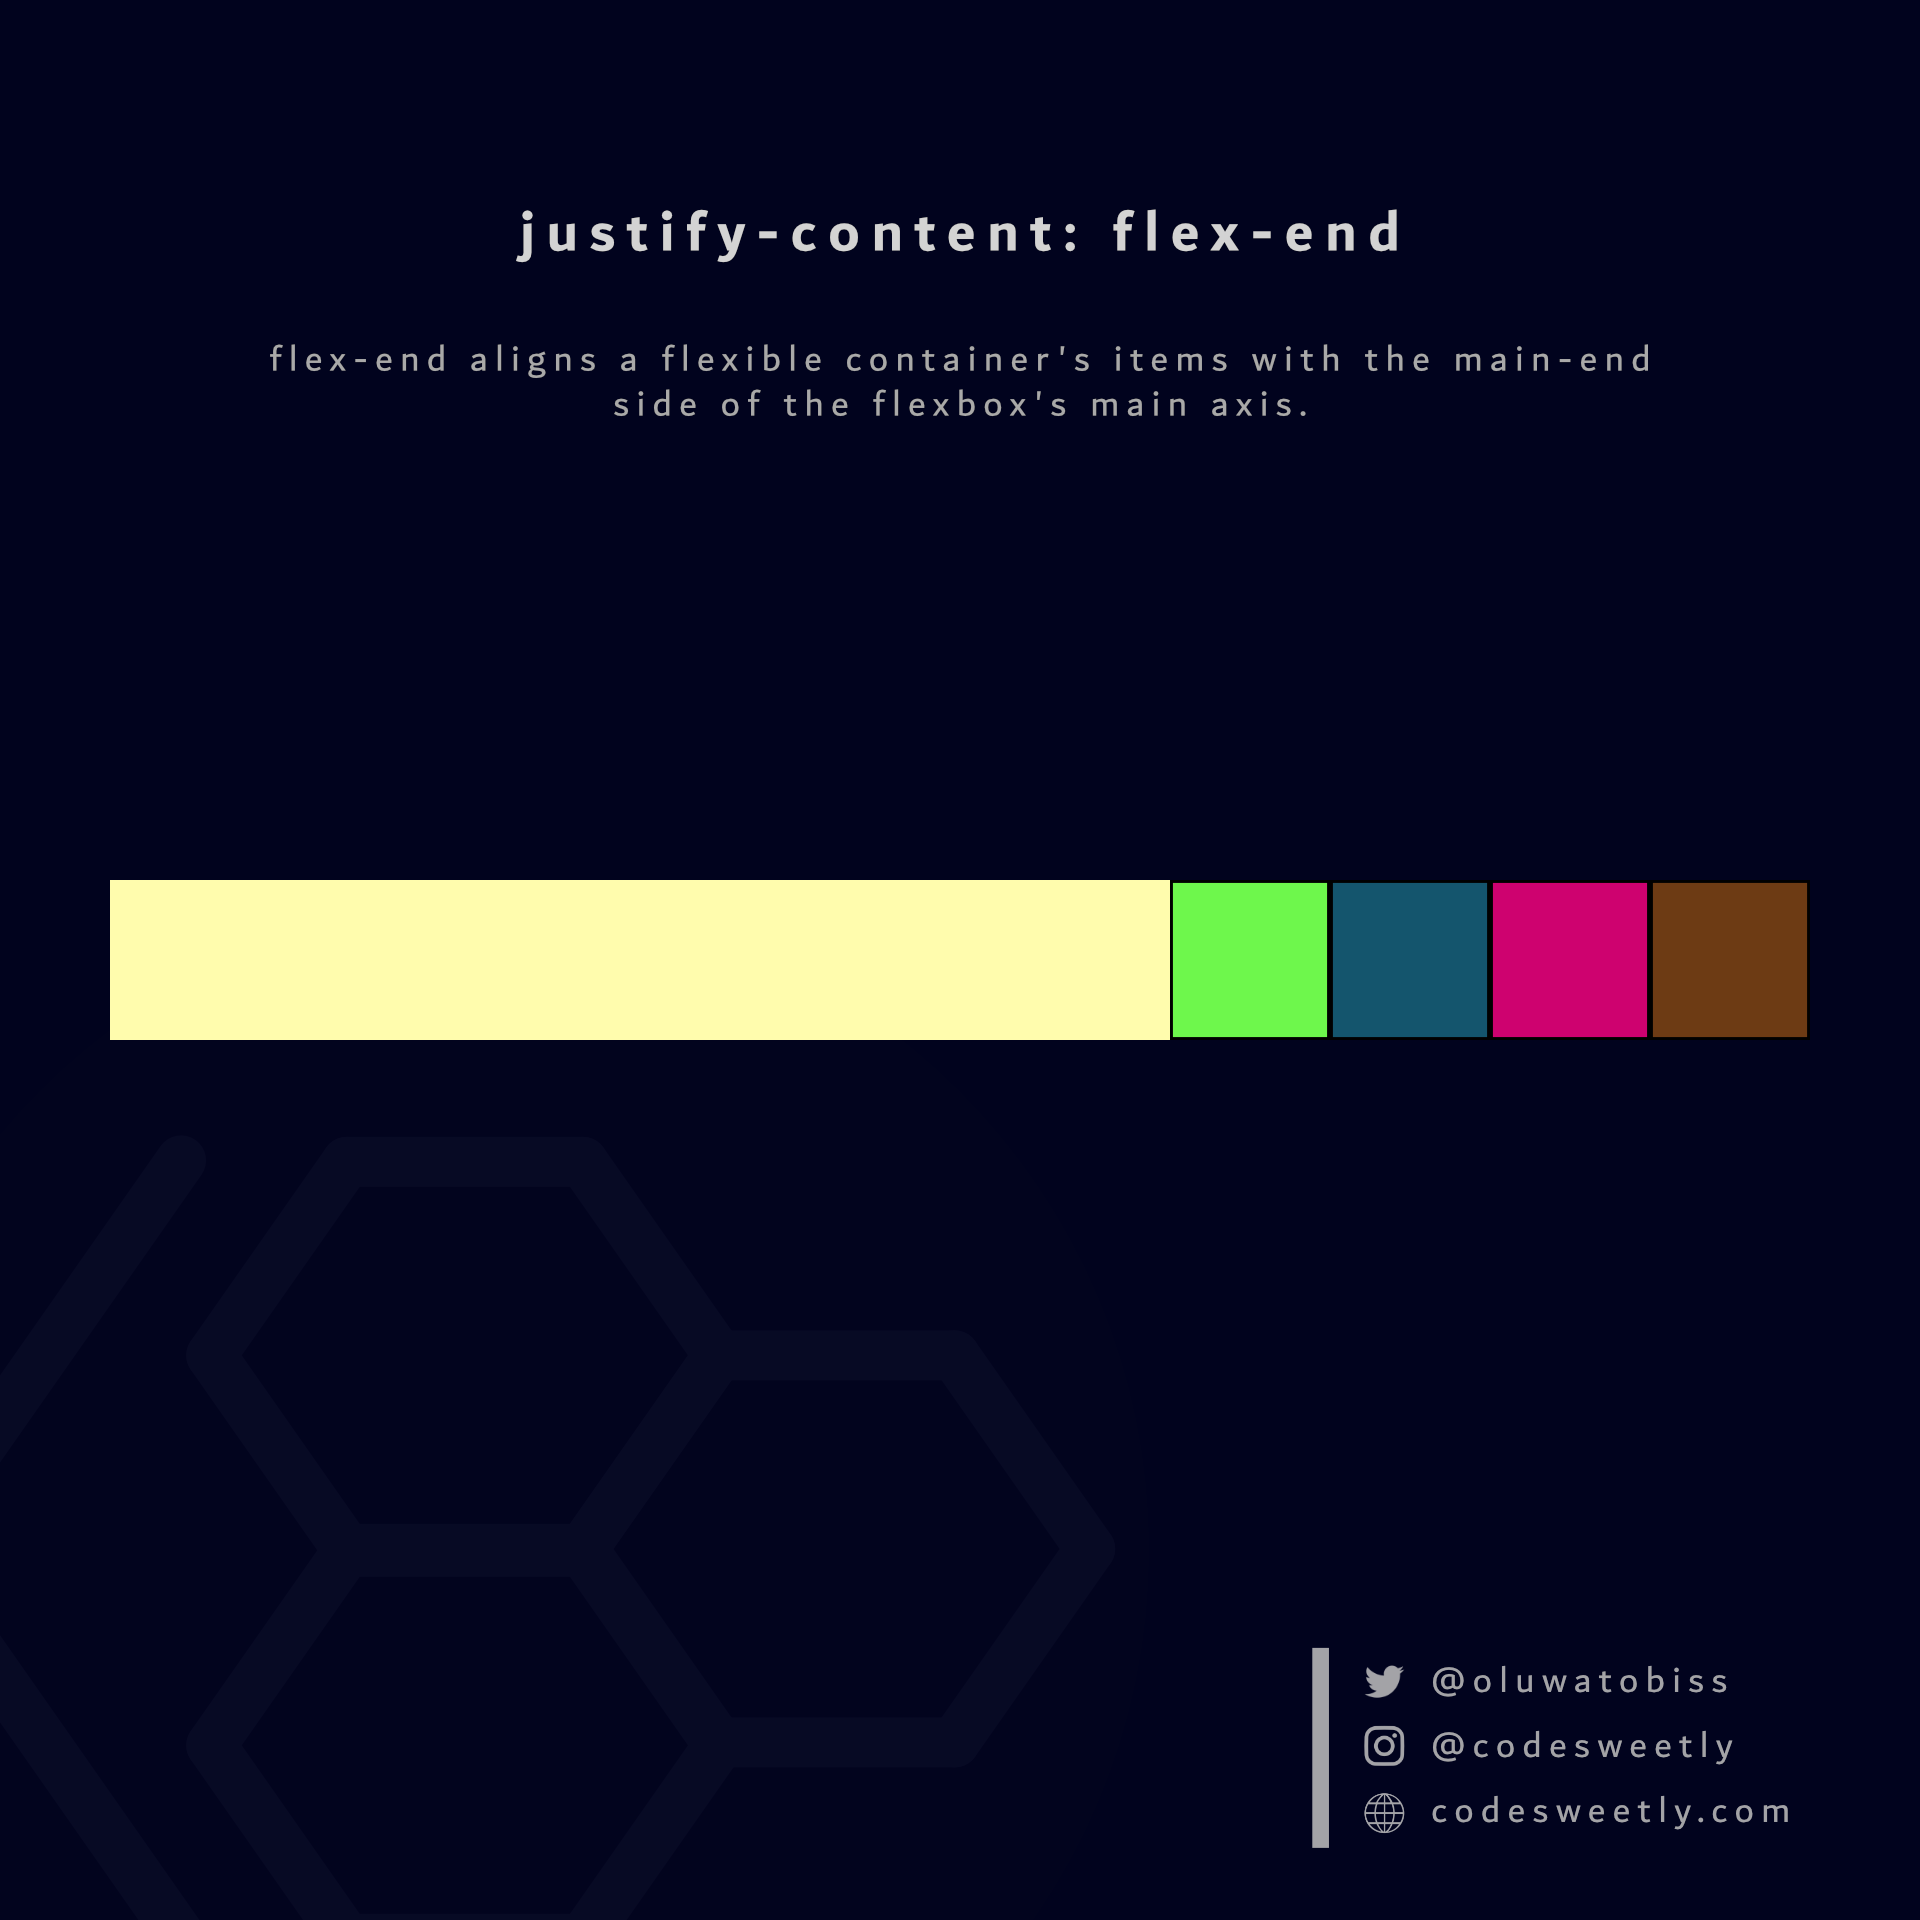 Illustration of justify-content&#39;s flex-end value